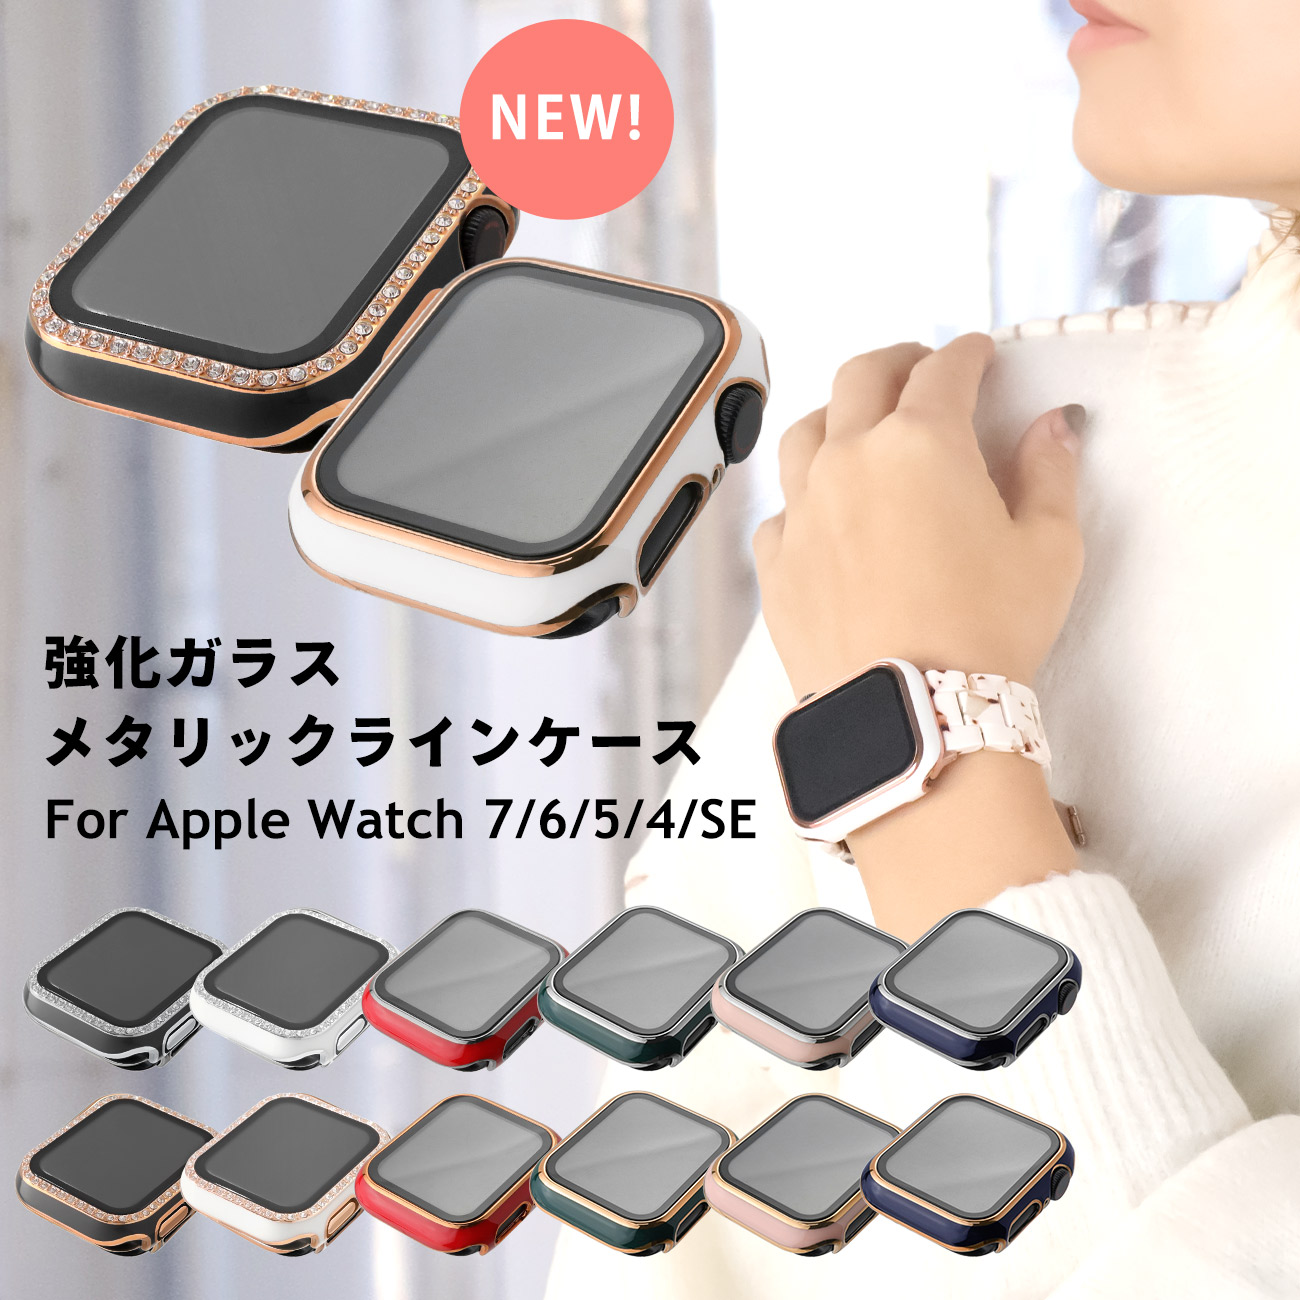 84%OFF!】 新品 Apple Watch ケース キラキラ ストーン ブラック 40mm